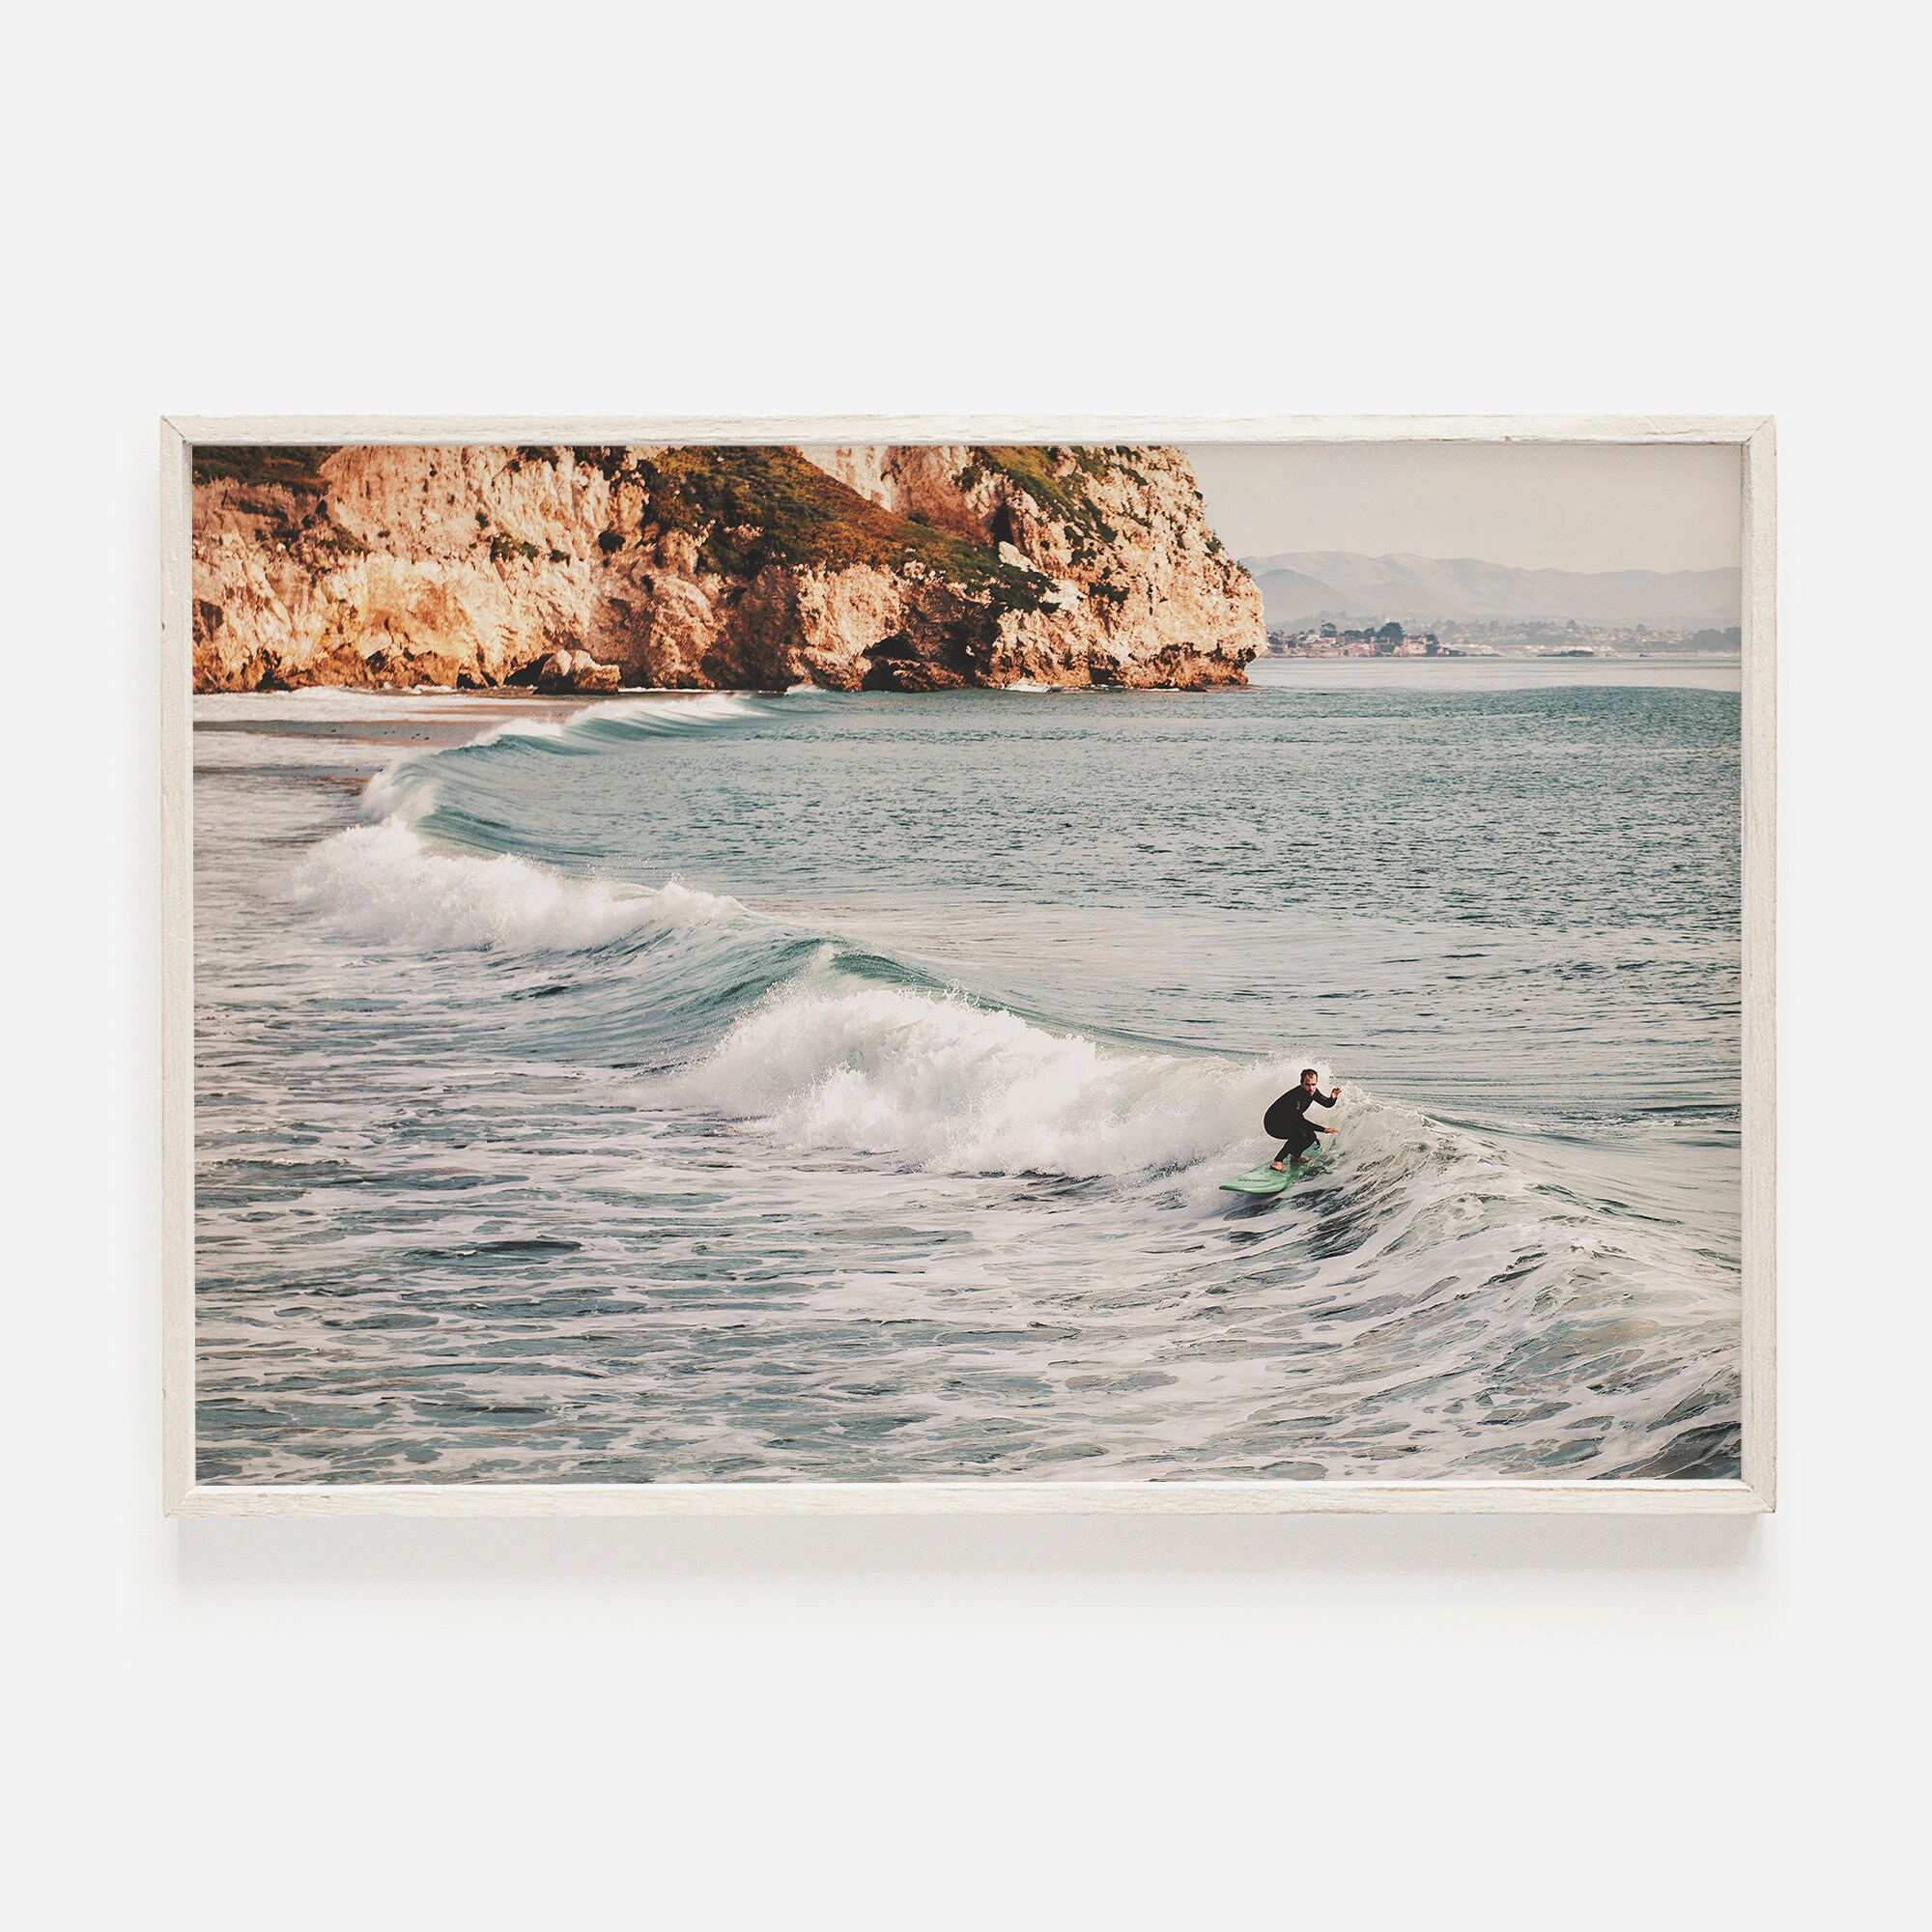 California Retro Surf Vintage Van Surfer Surfing Svg Png Dxf File –  artprintfile